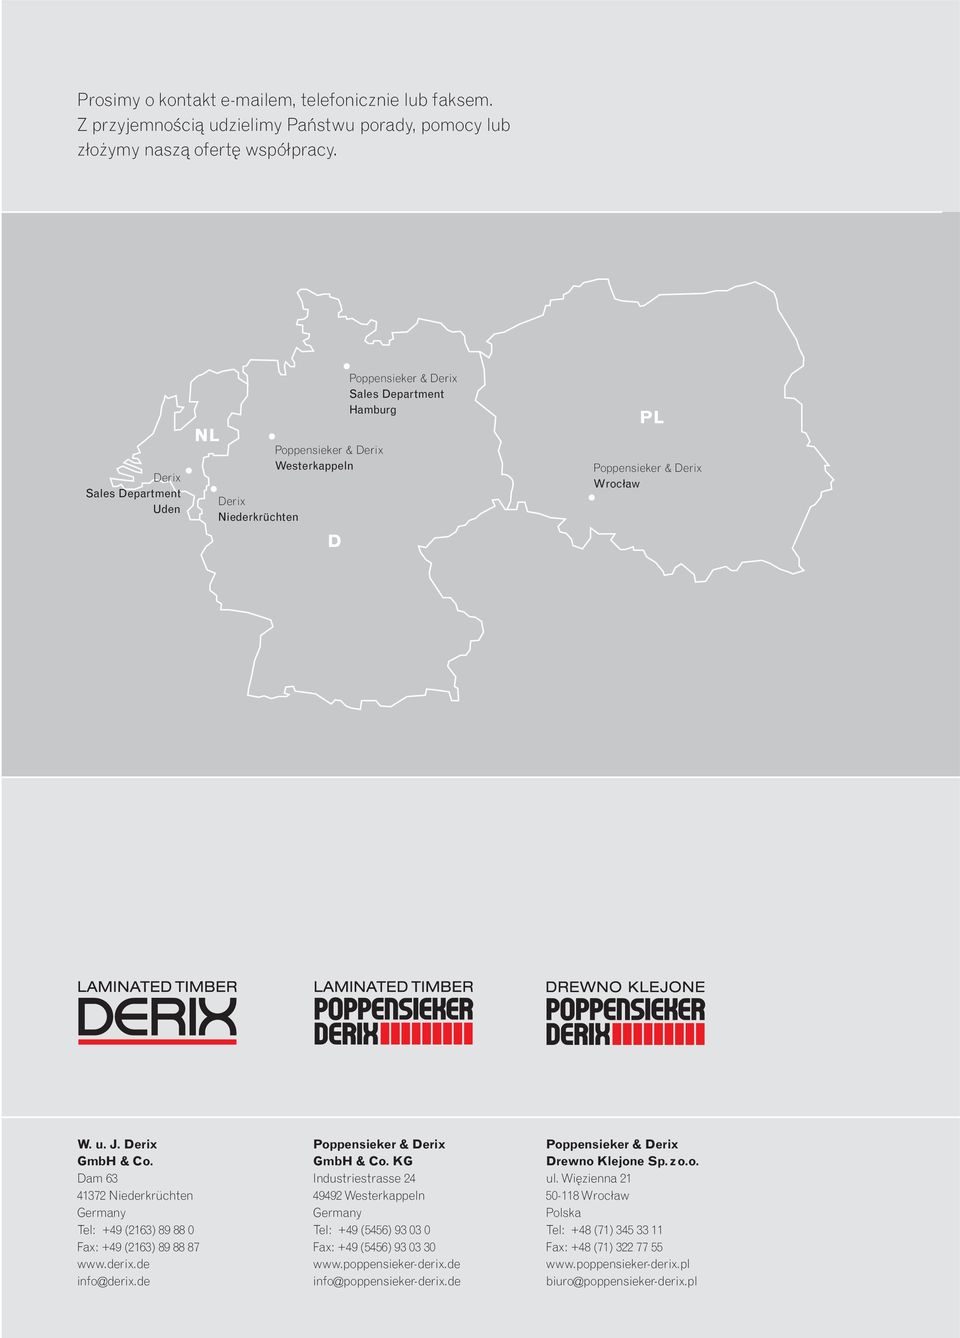 Dam 63 41372 Niederkrüchten Germany Tel: +49 (2163) 89 88 0 Fax: +49 (2163) 89 88 87 www.derix.de info@derix.de Poppensieker & Derix GmbH & Co.